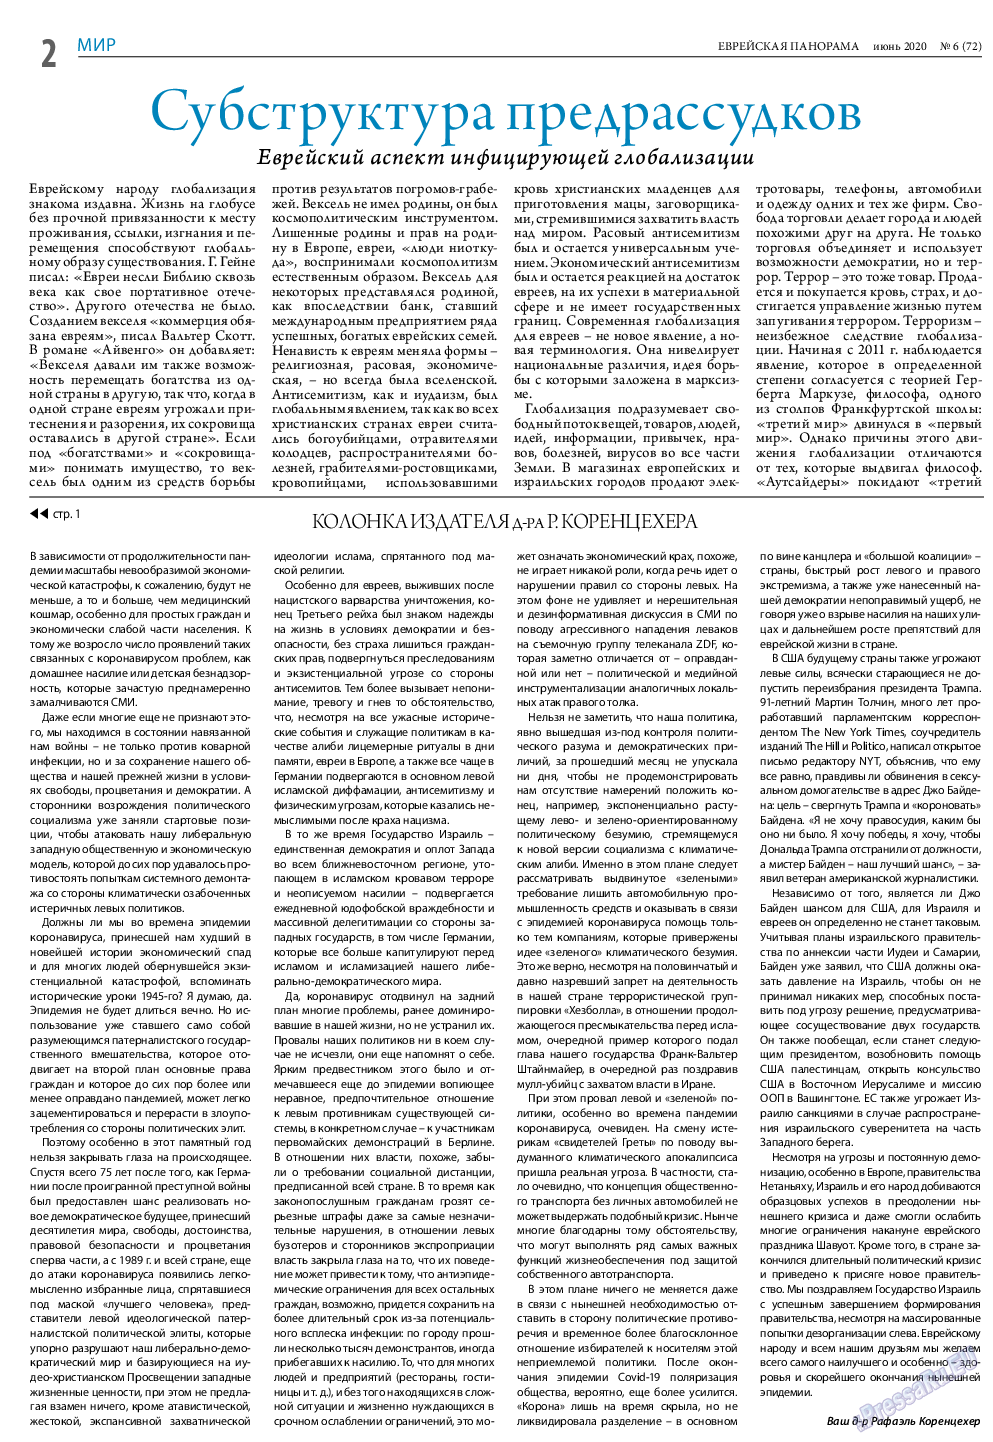 Еврейская панорама, газета. 2020 №6 стр.2